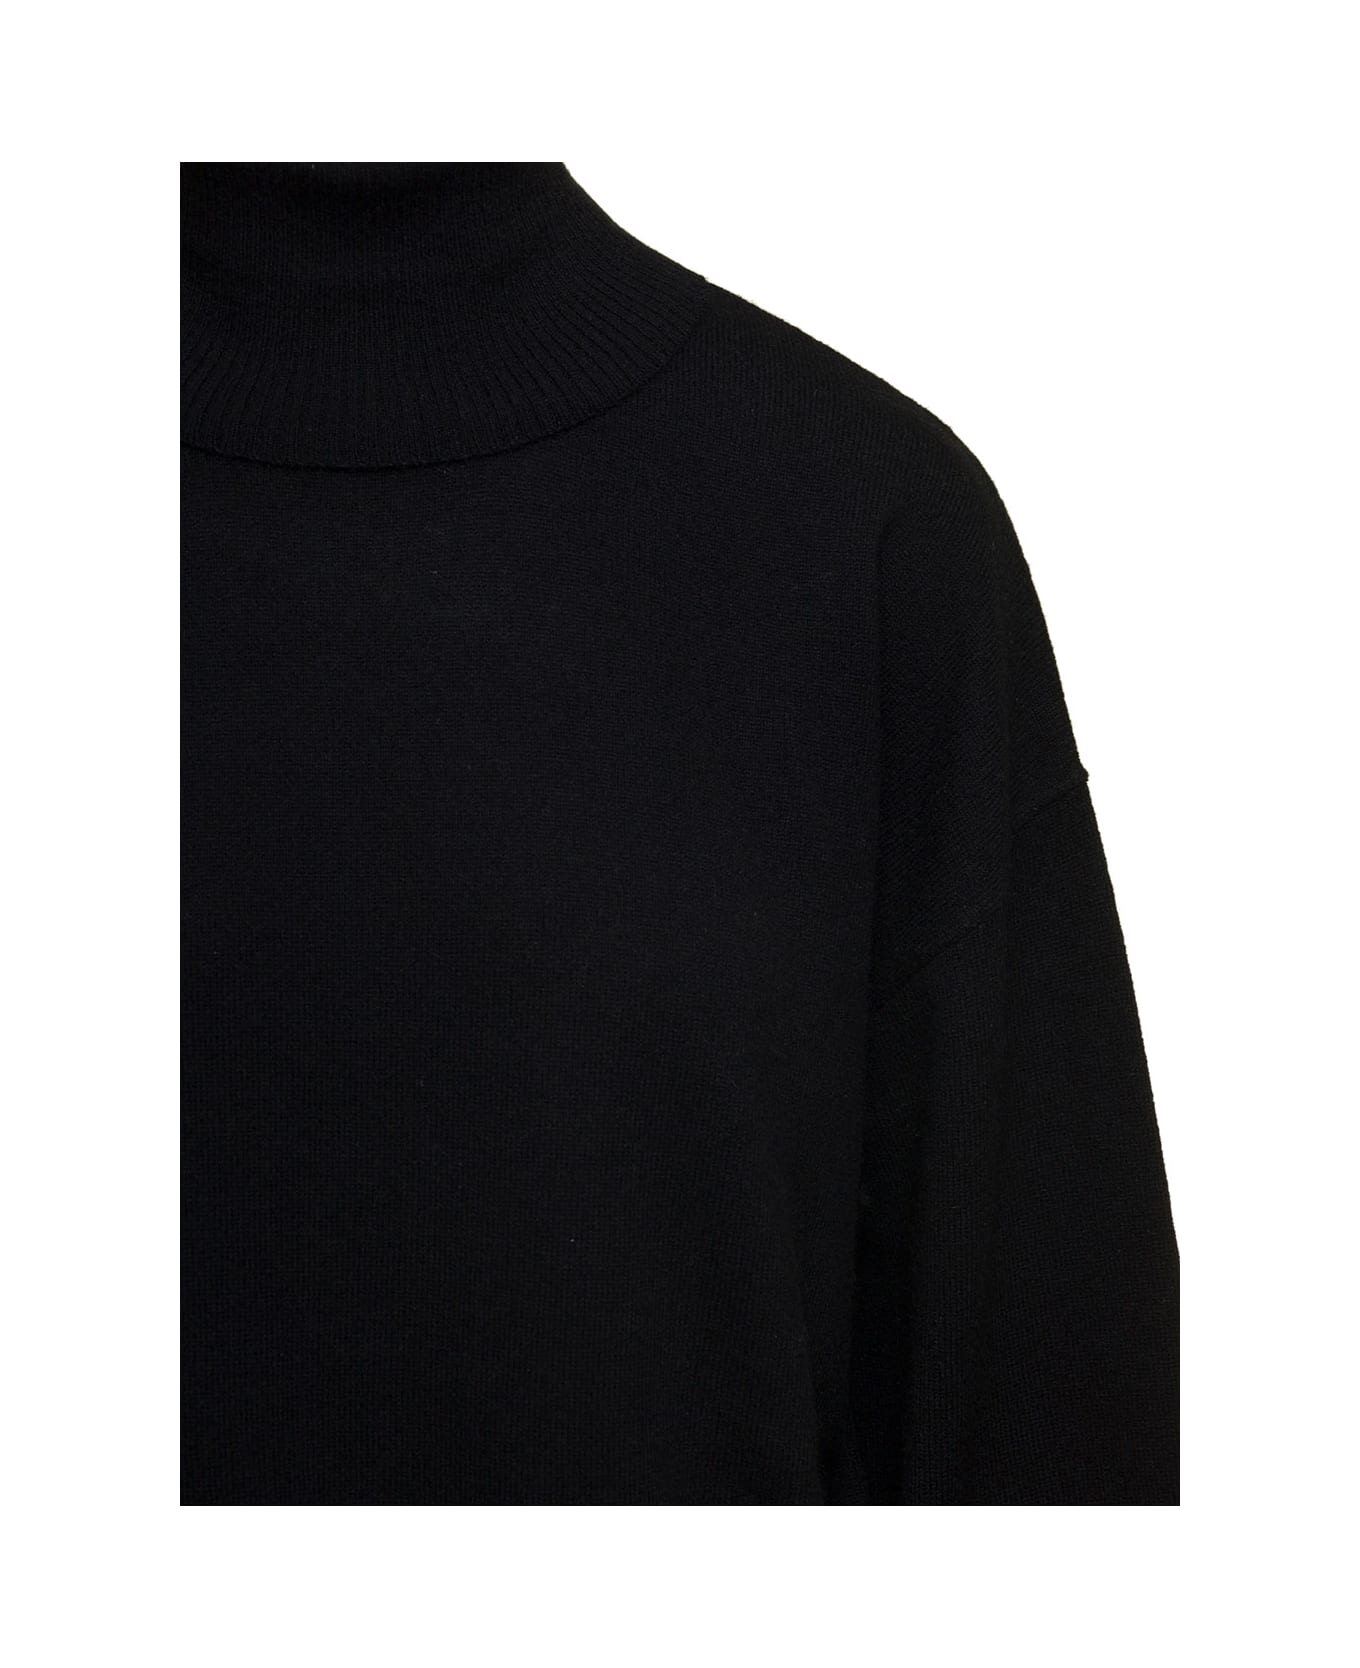 Parosh Black Mock Neck Sweatshirt With Long Sleeves In Cashmere Woman - Black